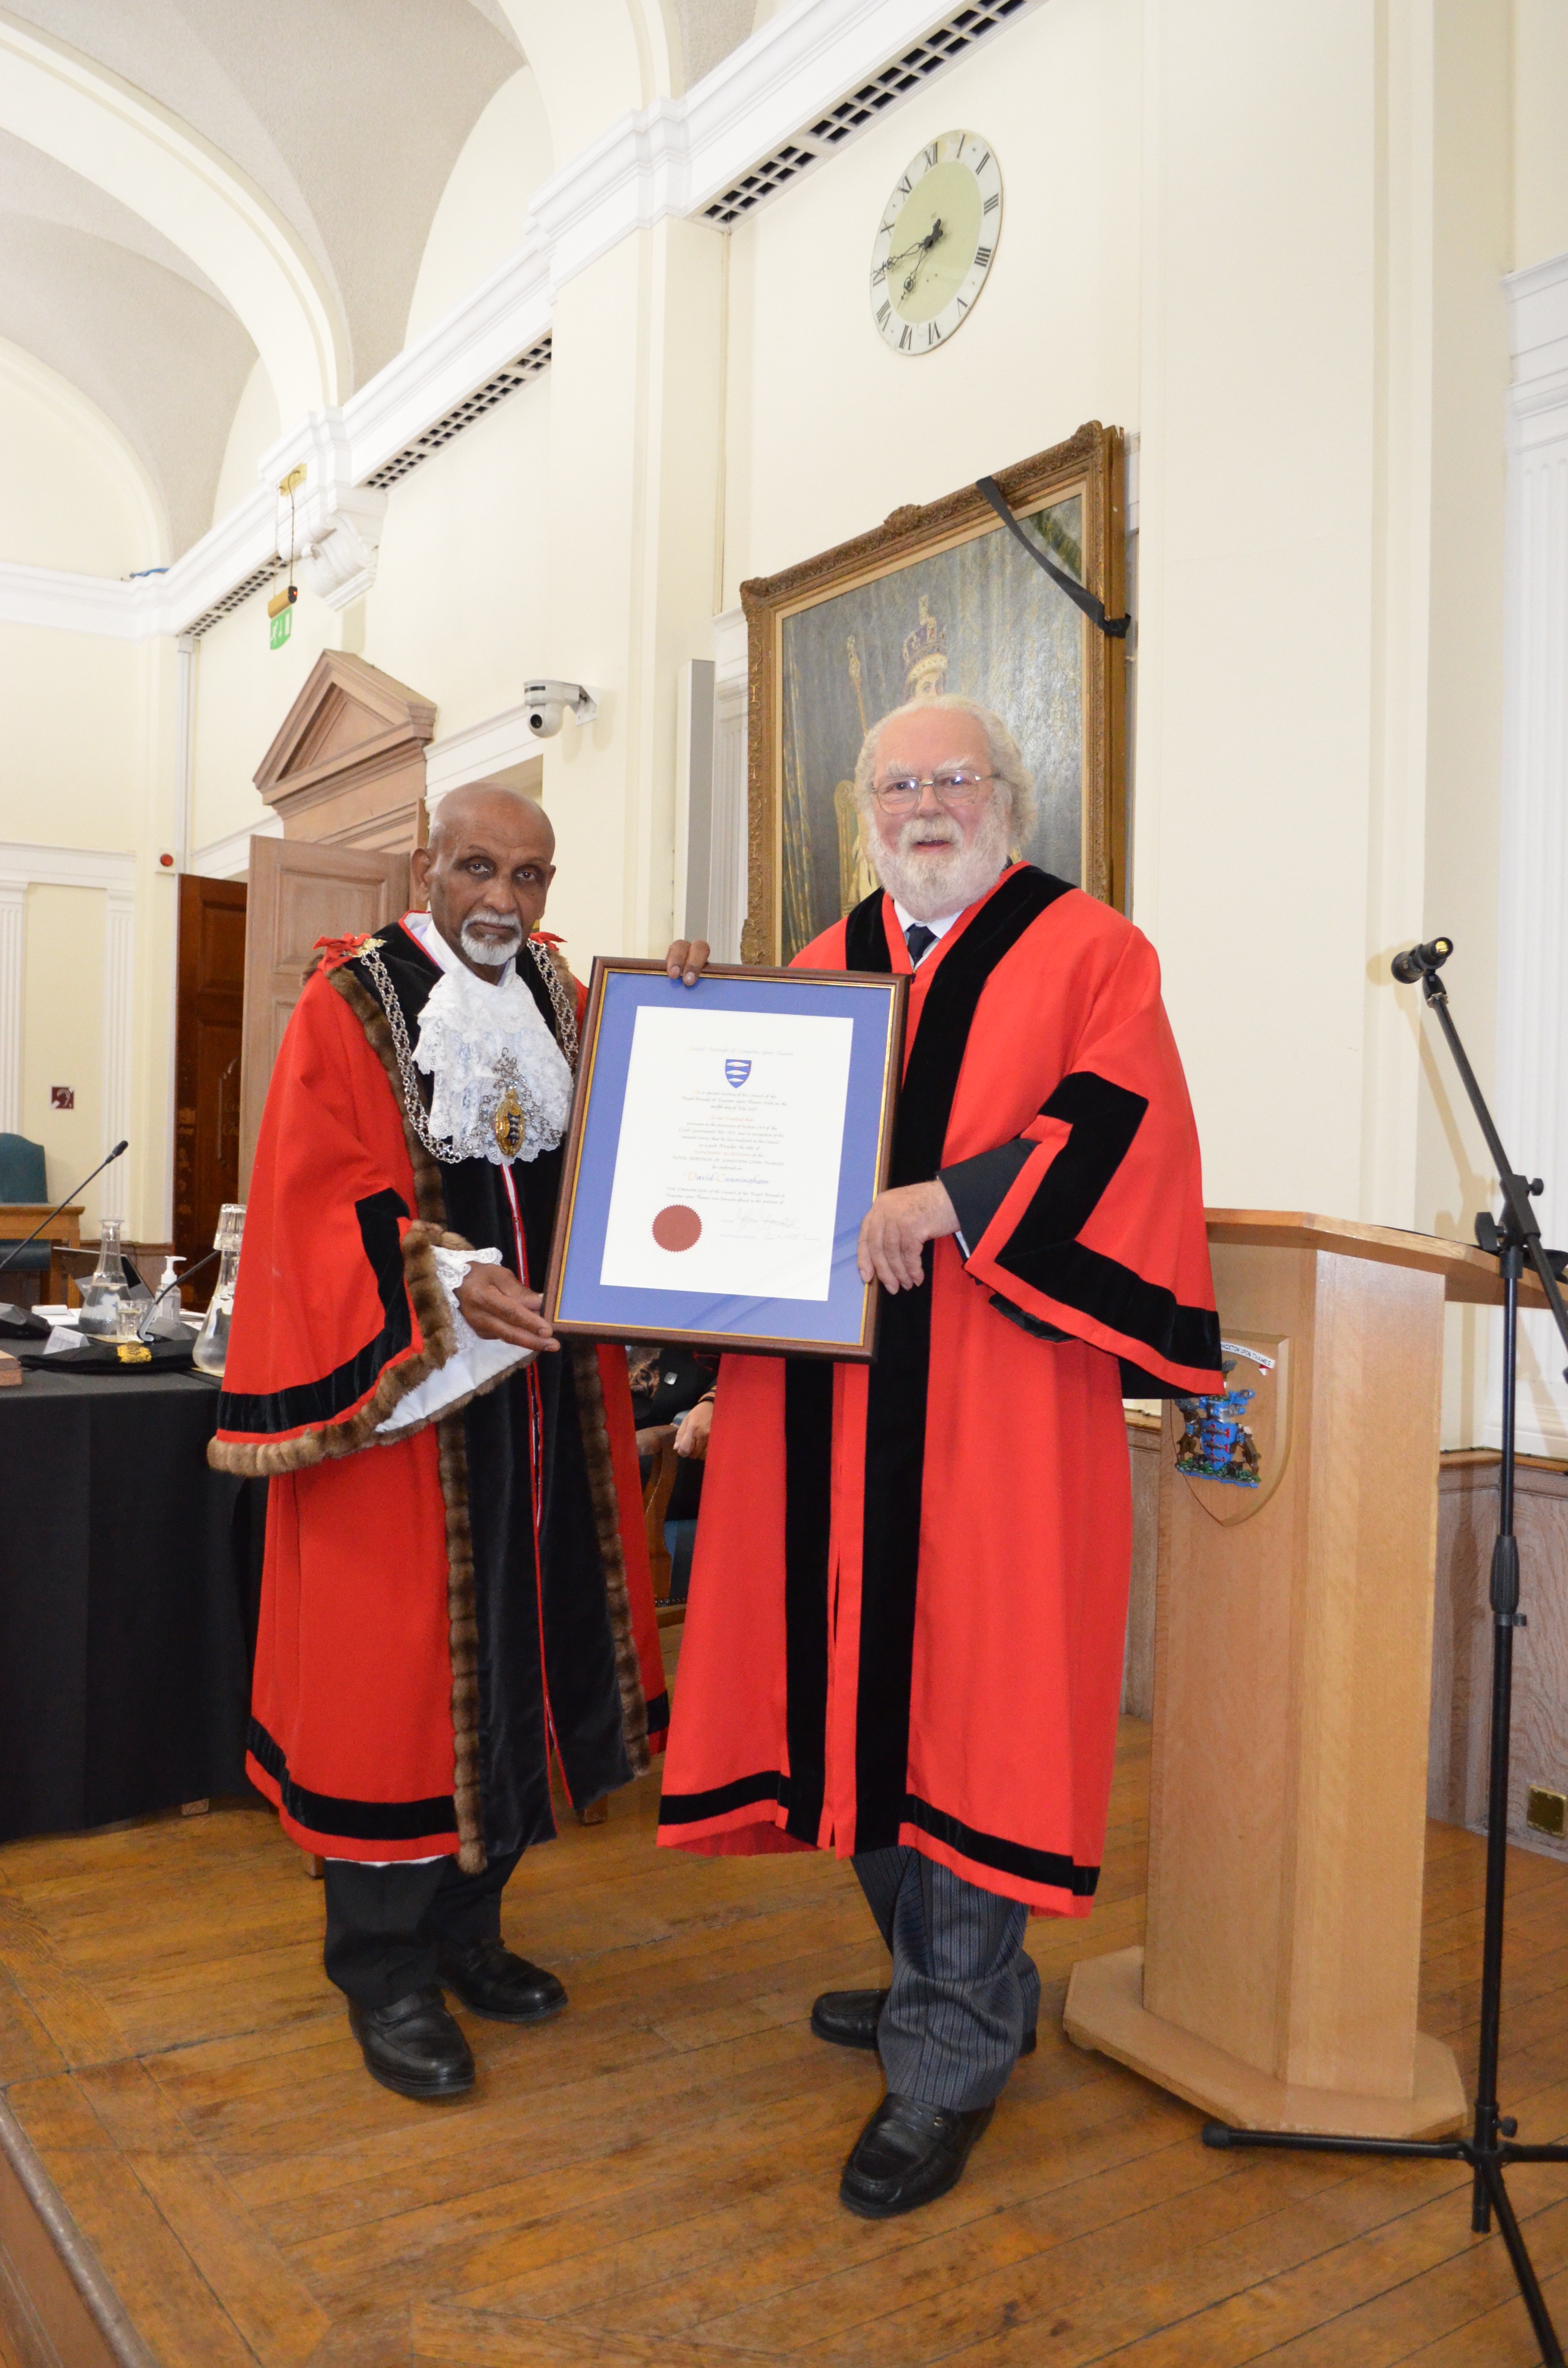 David Cunningham and the Mayor of Kingston